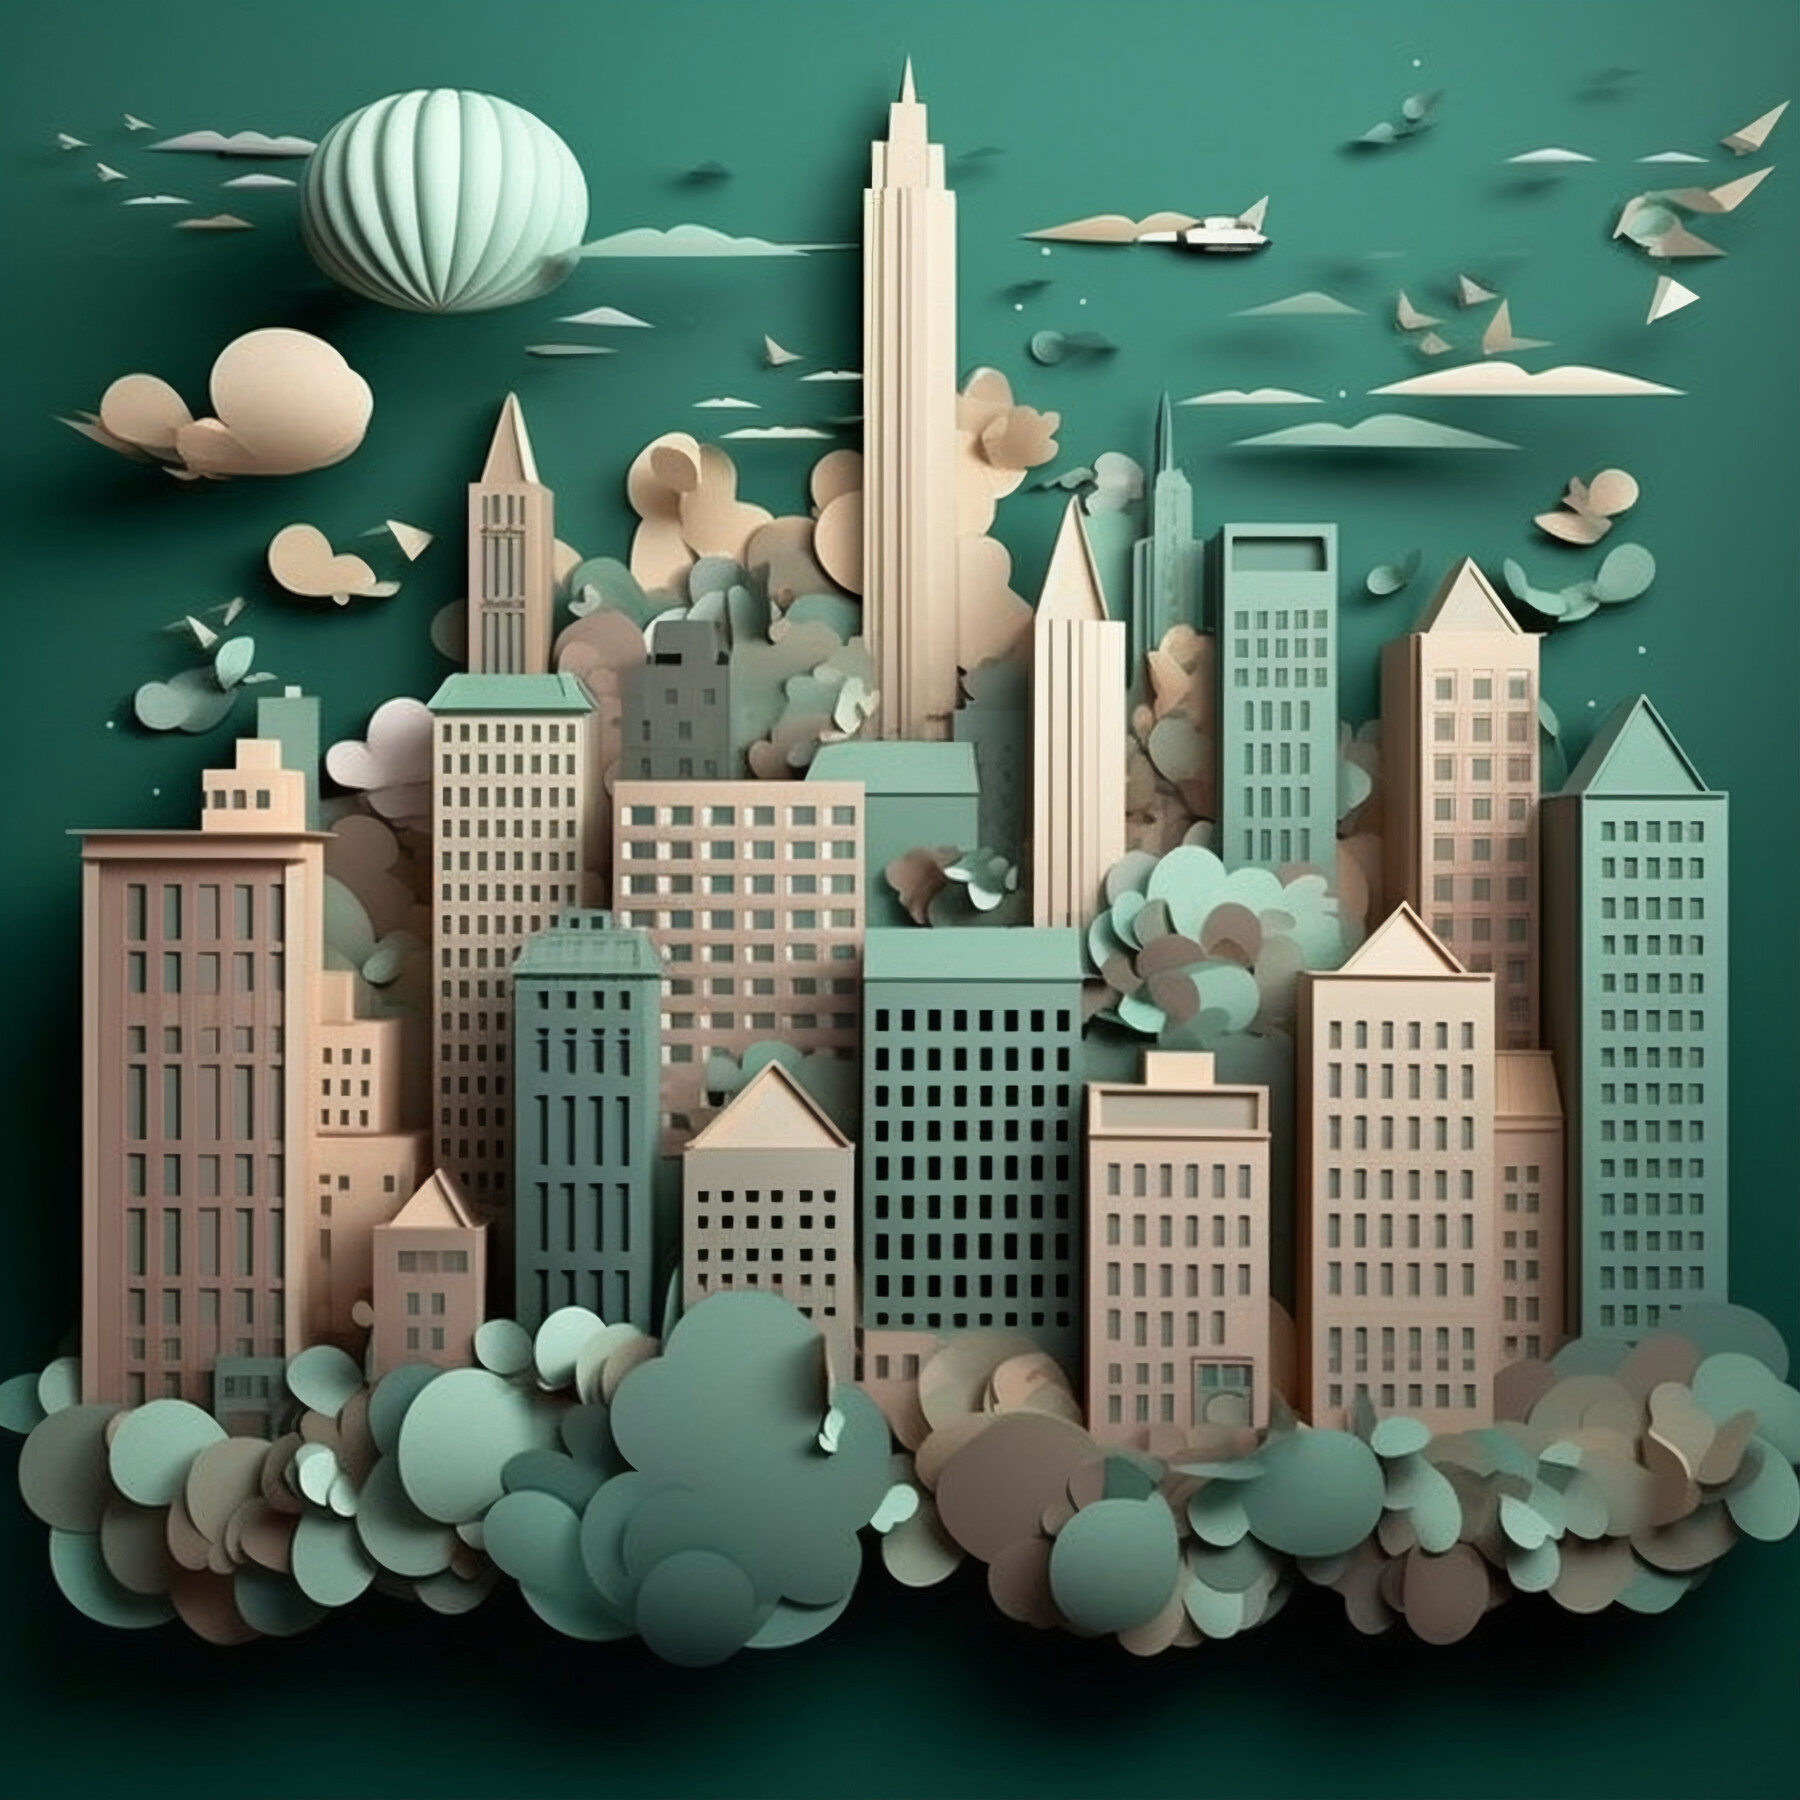 Paper cut Art of City And Landscapes